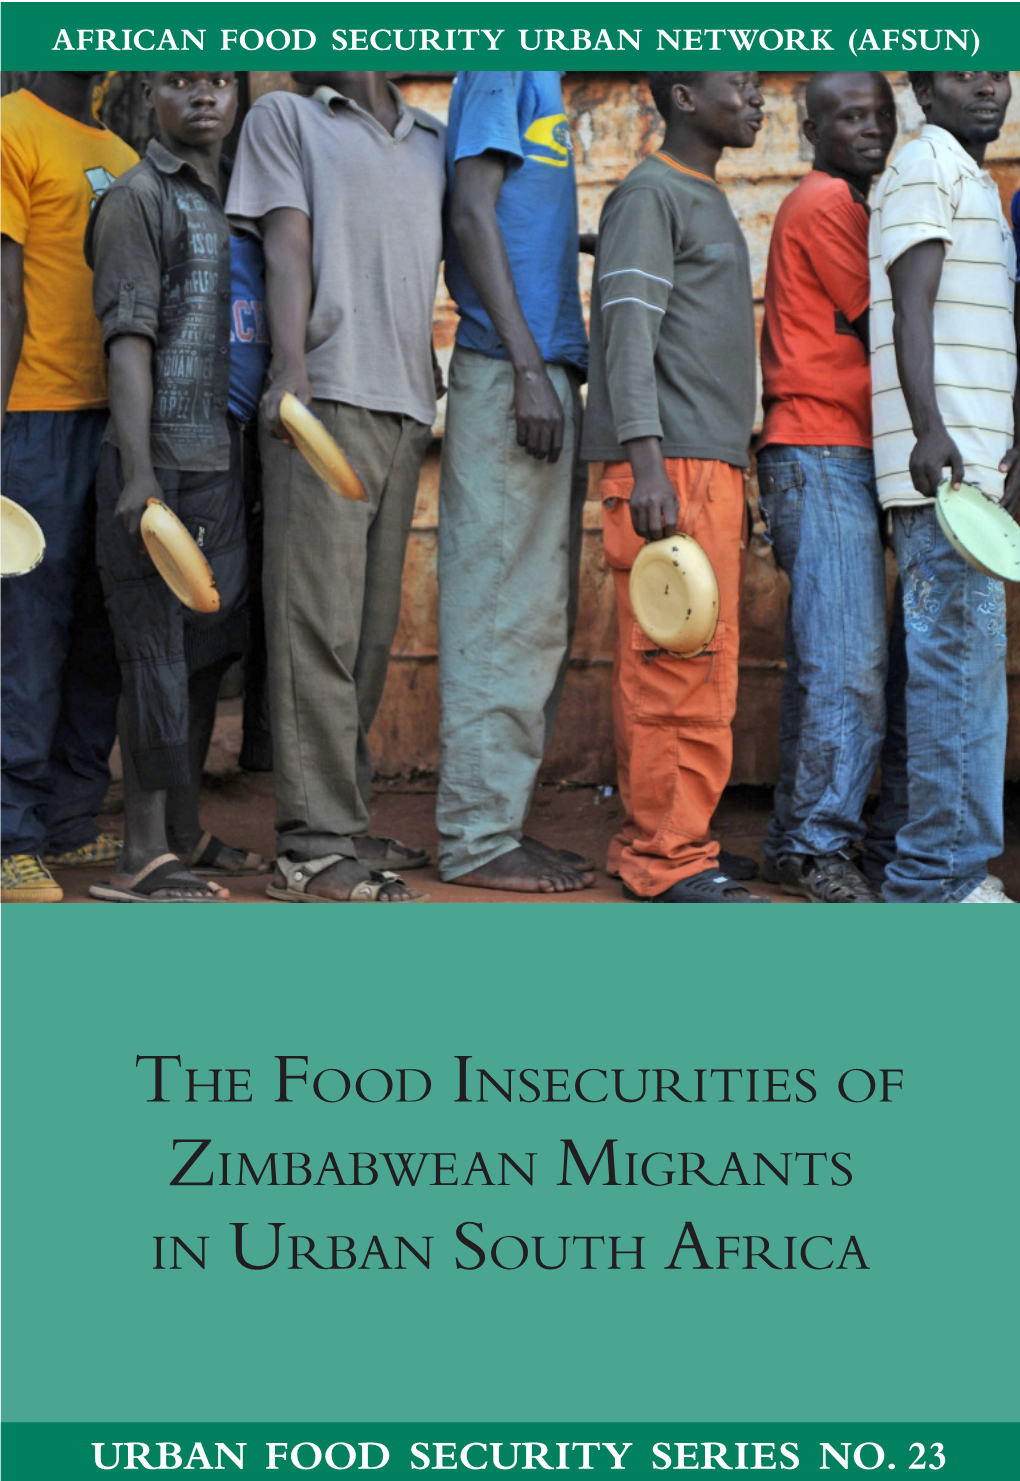 The Food Insecurities of Zimbabwean Migrants in Urban South Africa